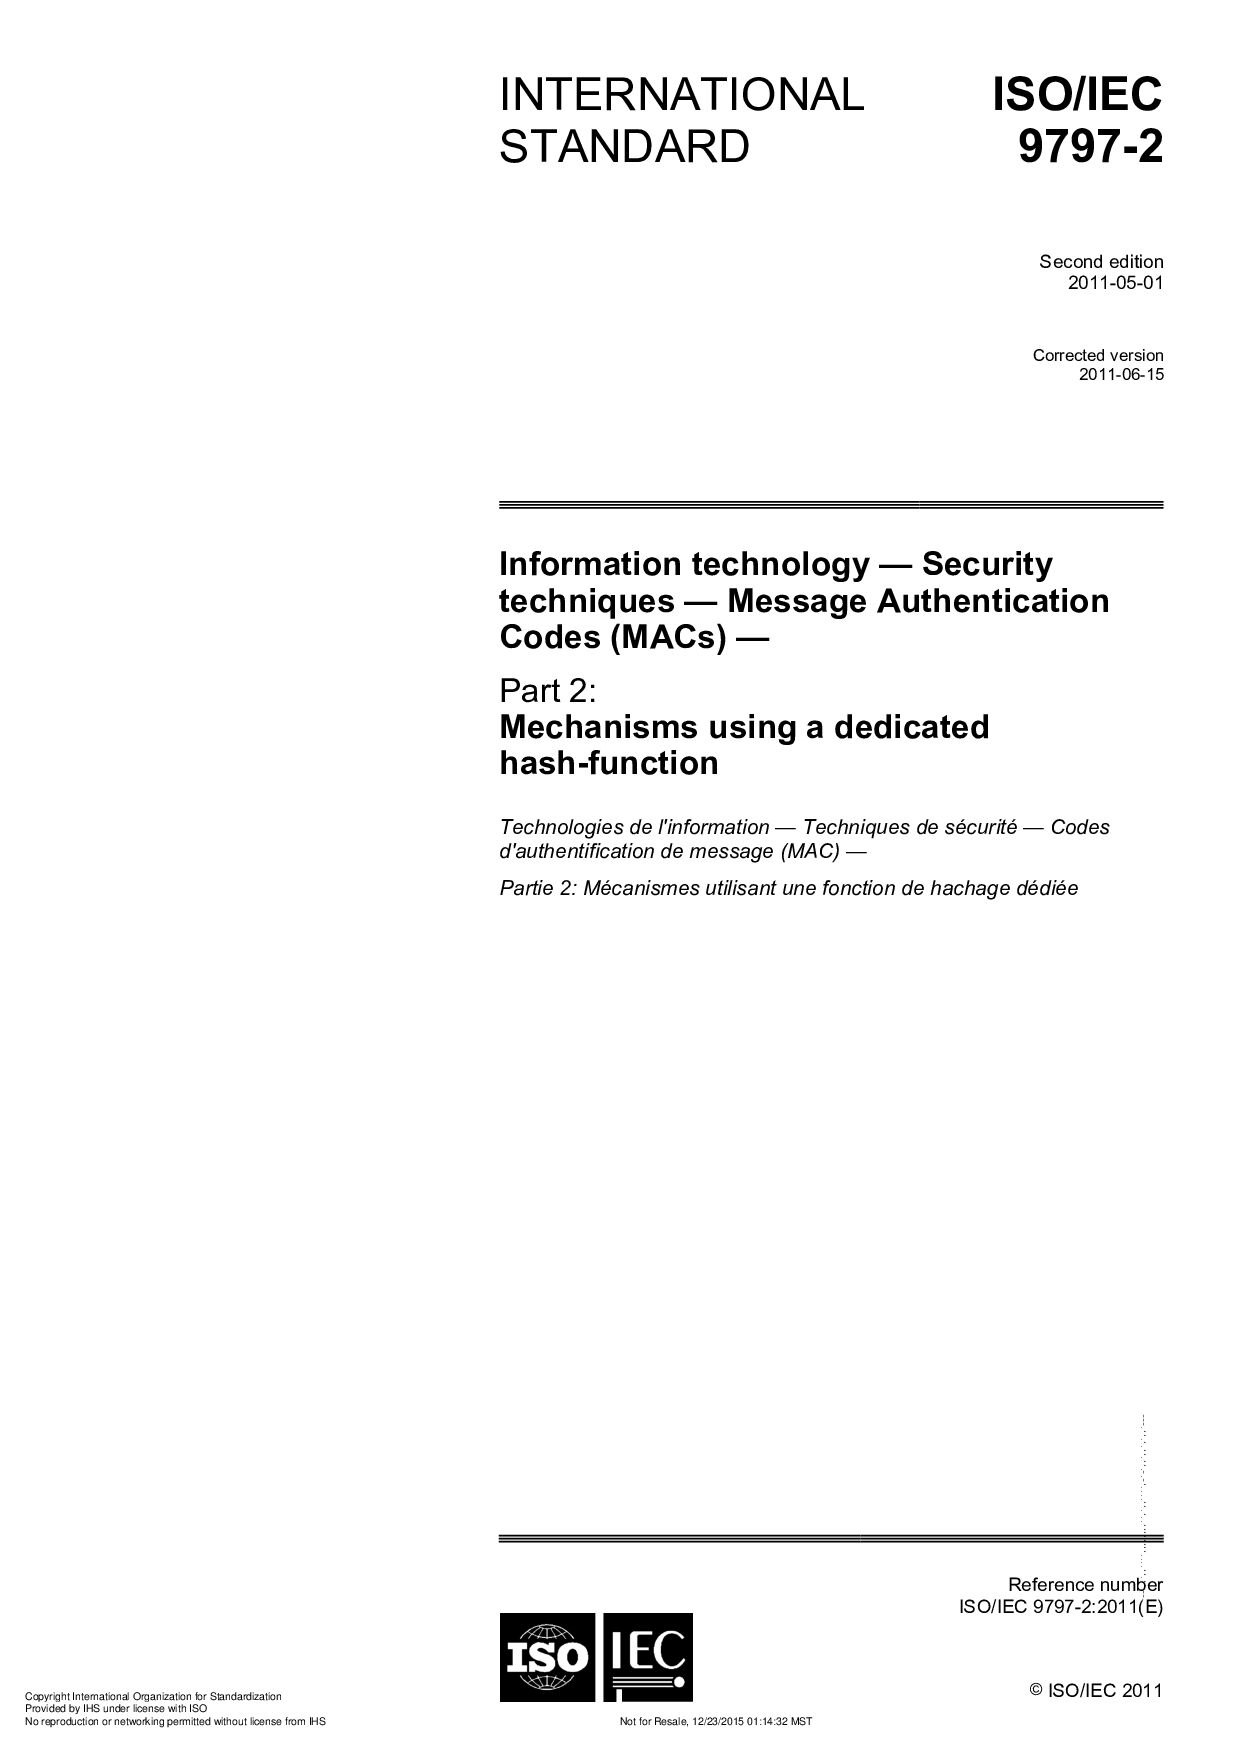 ISO/IEC 9797-2:2011/Cor 1:2011